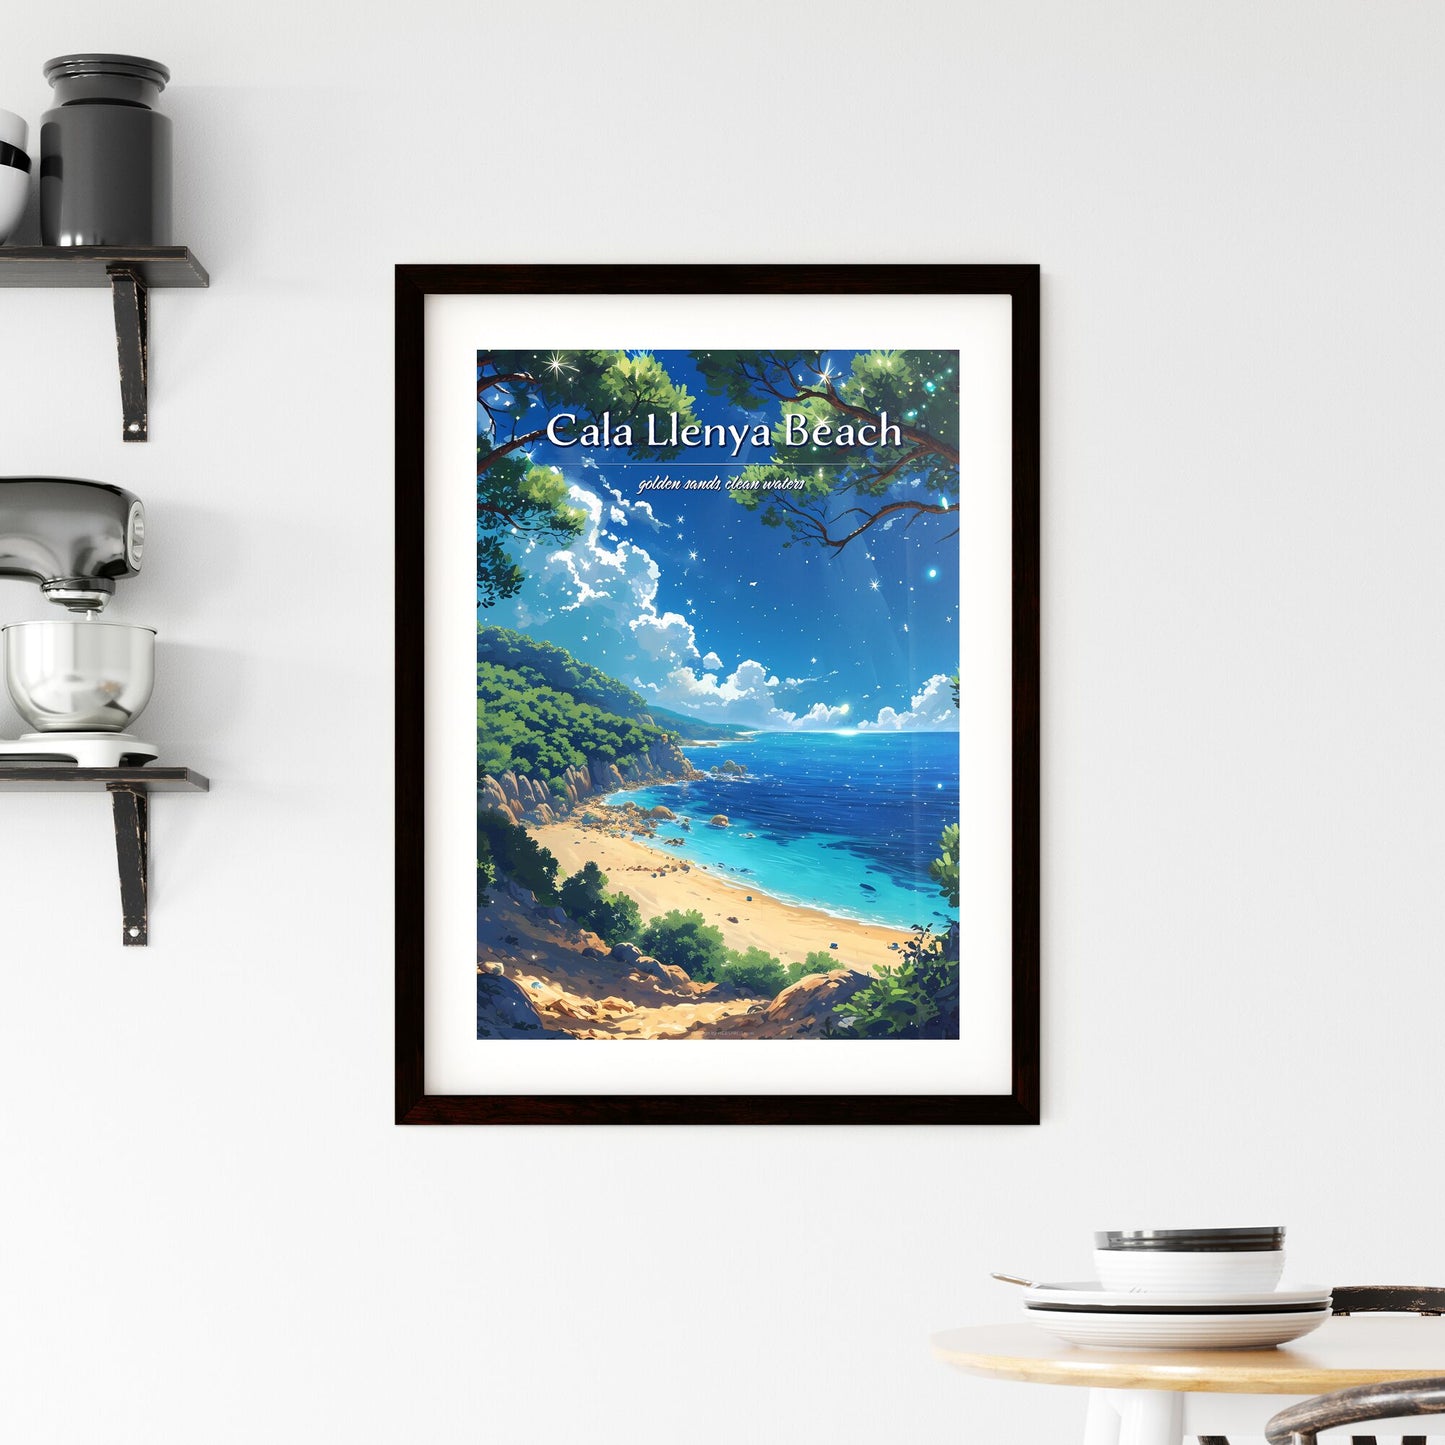 Cala Llenya Beach - Art print of a beach with trees and a blue ocean Default Title